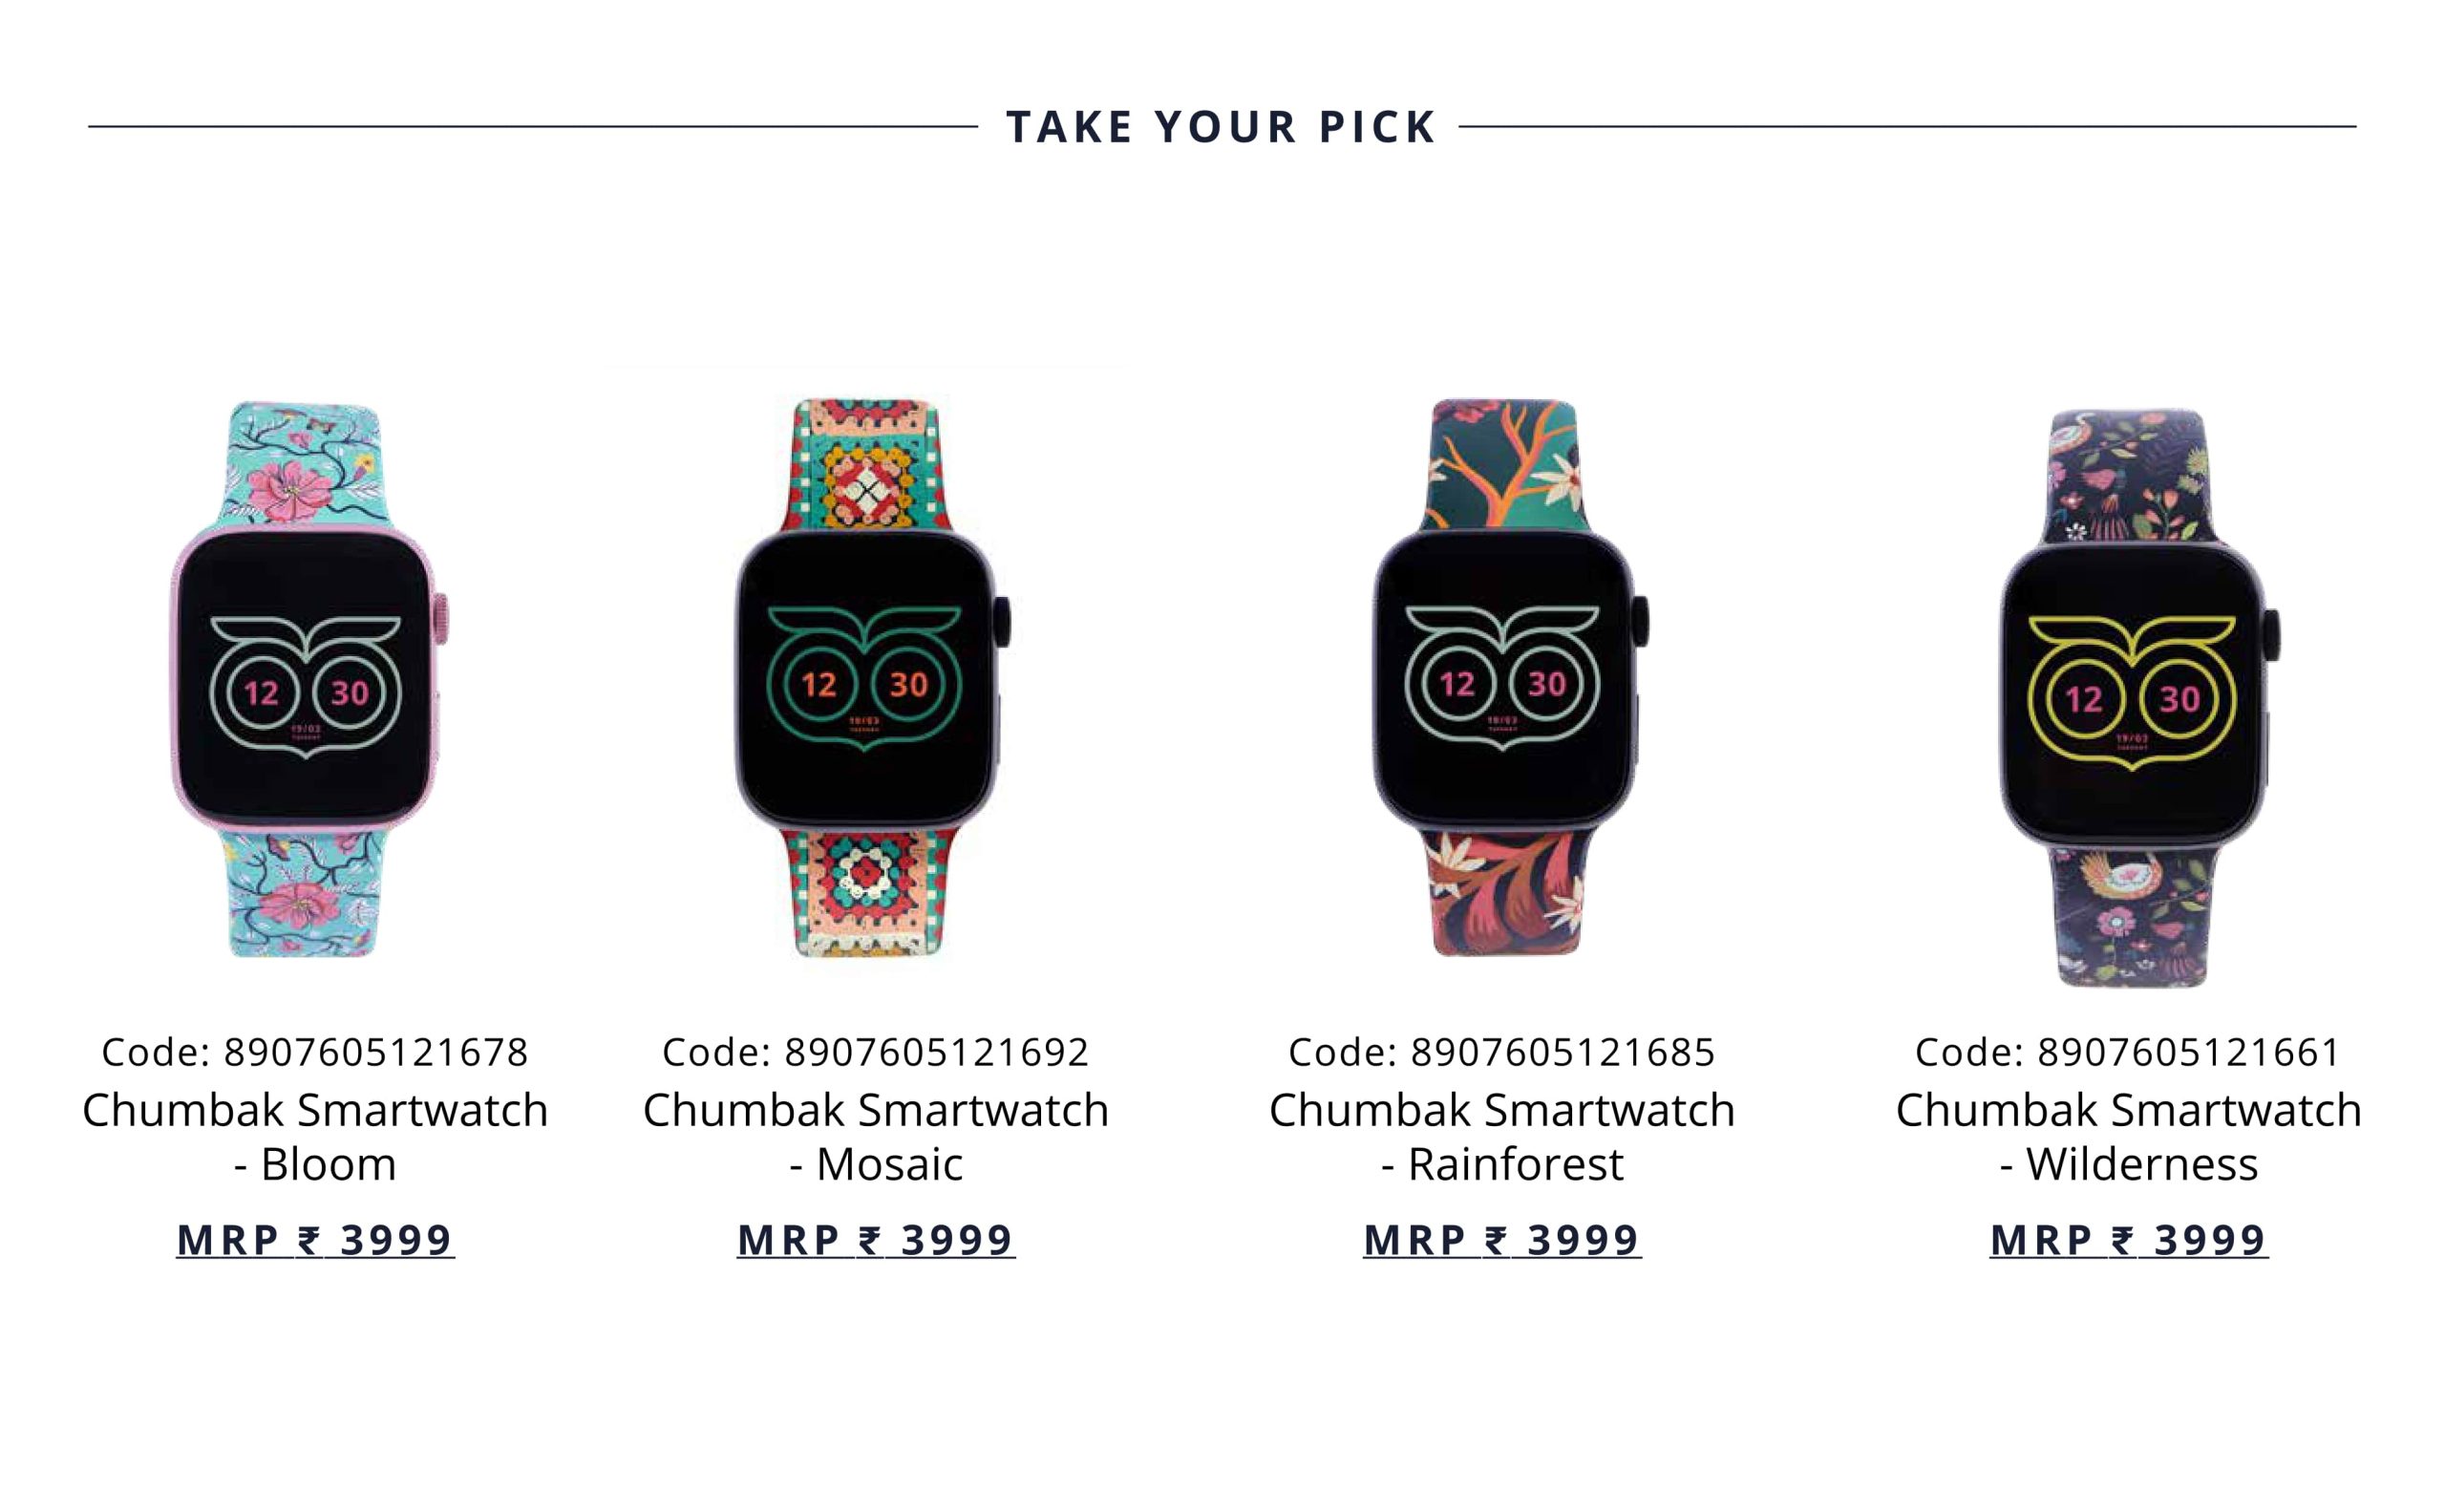 Lifestyle Brand Chumbak Unveils Its New Smartwatch Range On Amazon Fashion (1)